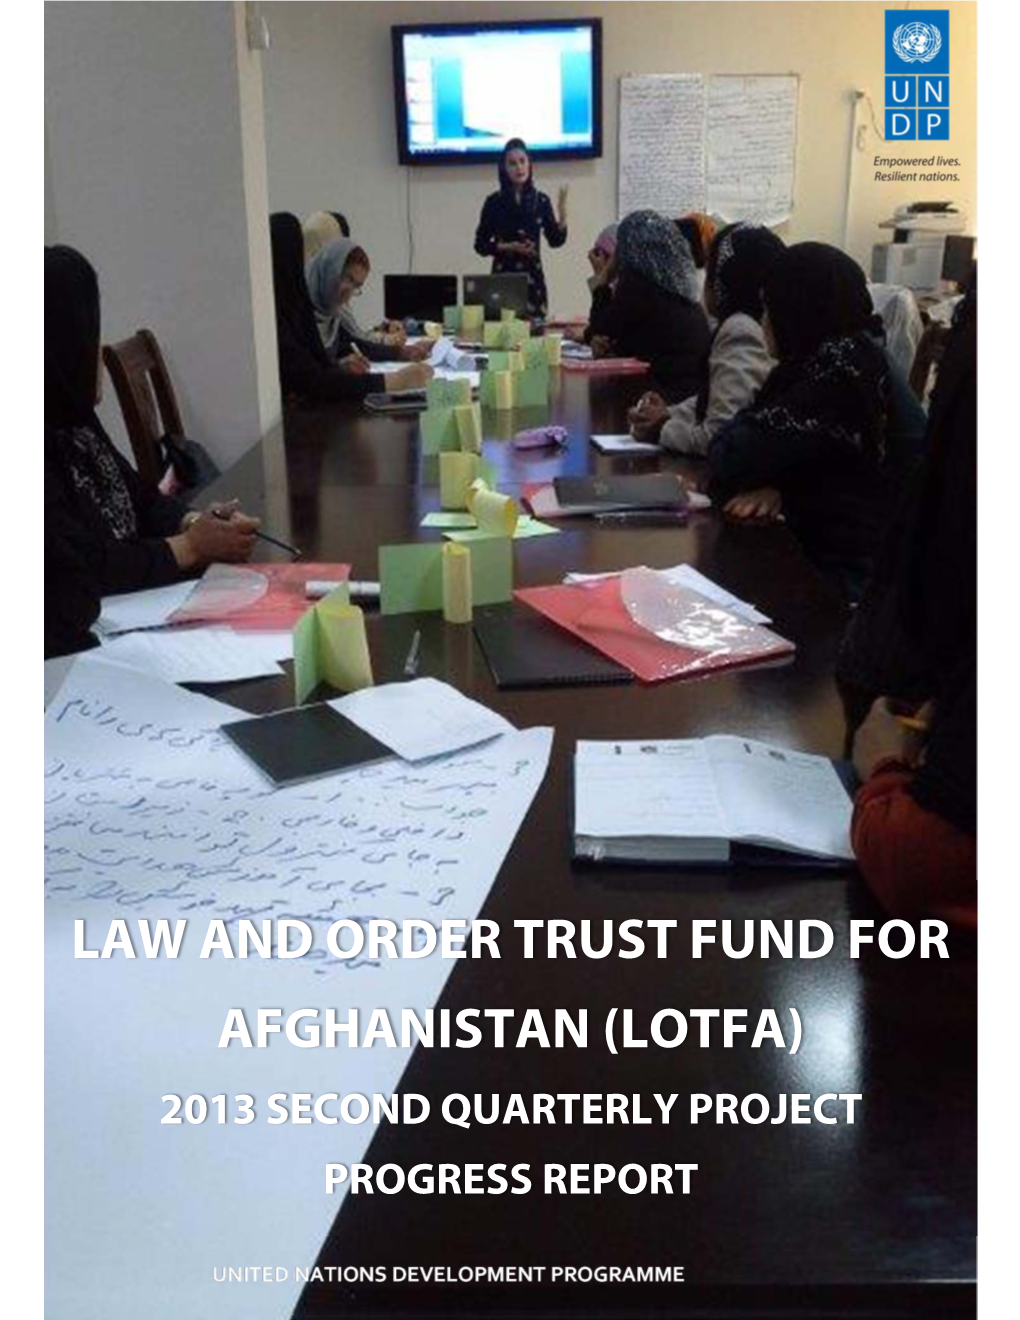 Lotfa) 2013 Second Quarterly Project Progress Report